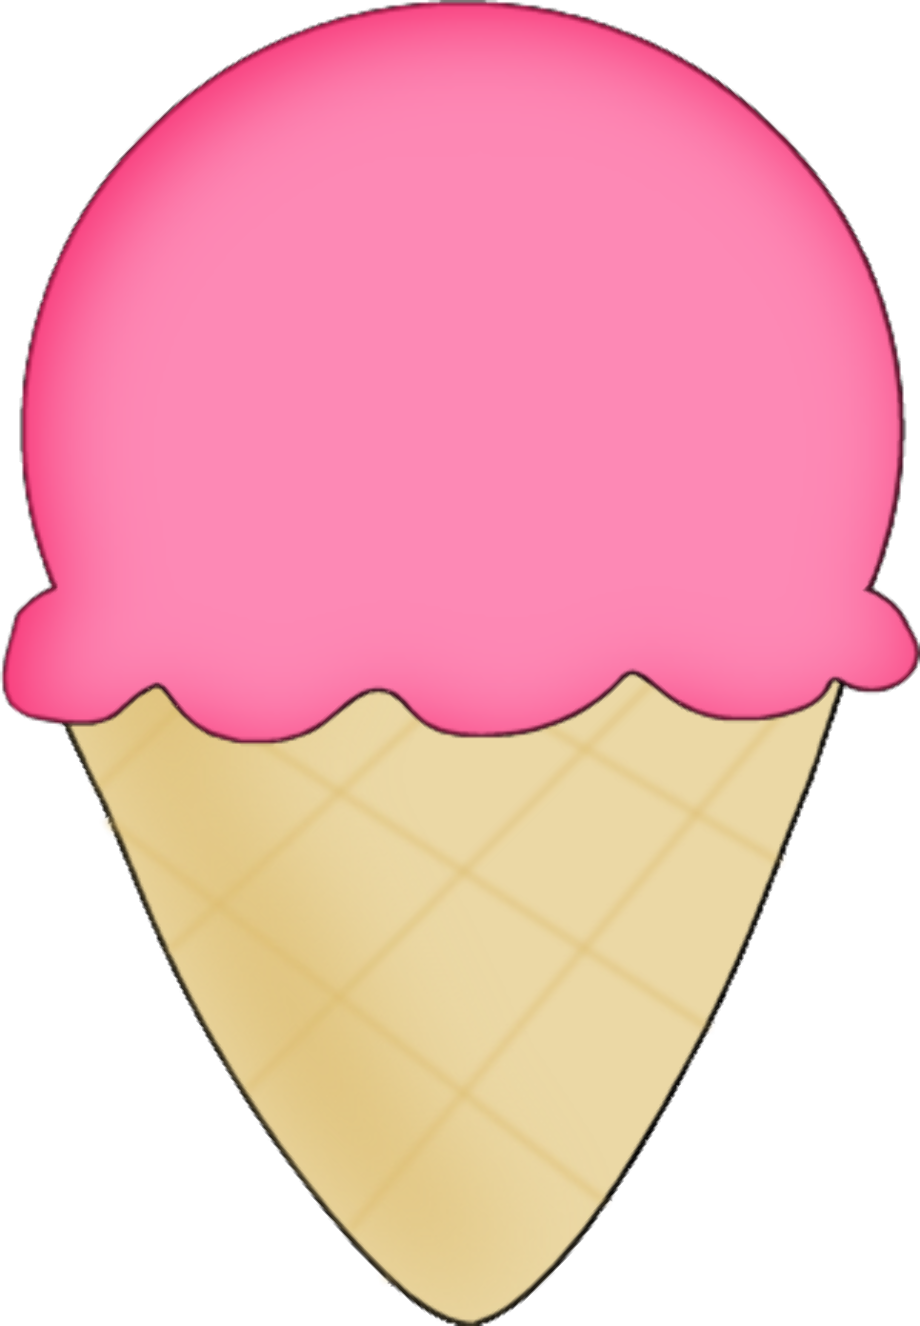 ice cream cone clipart yellow